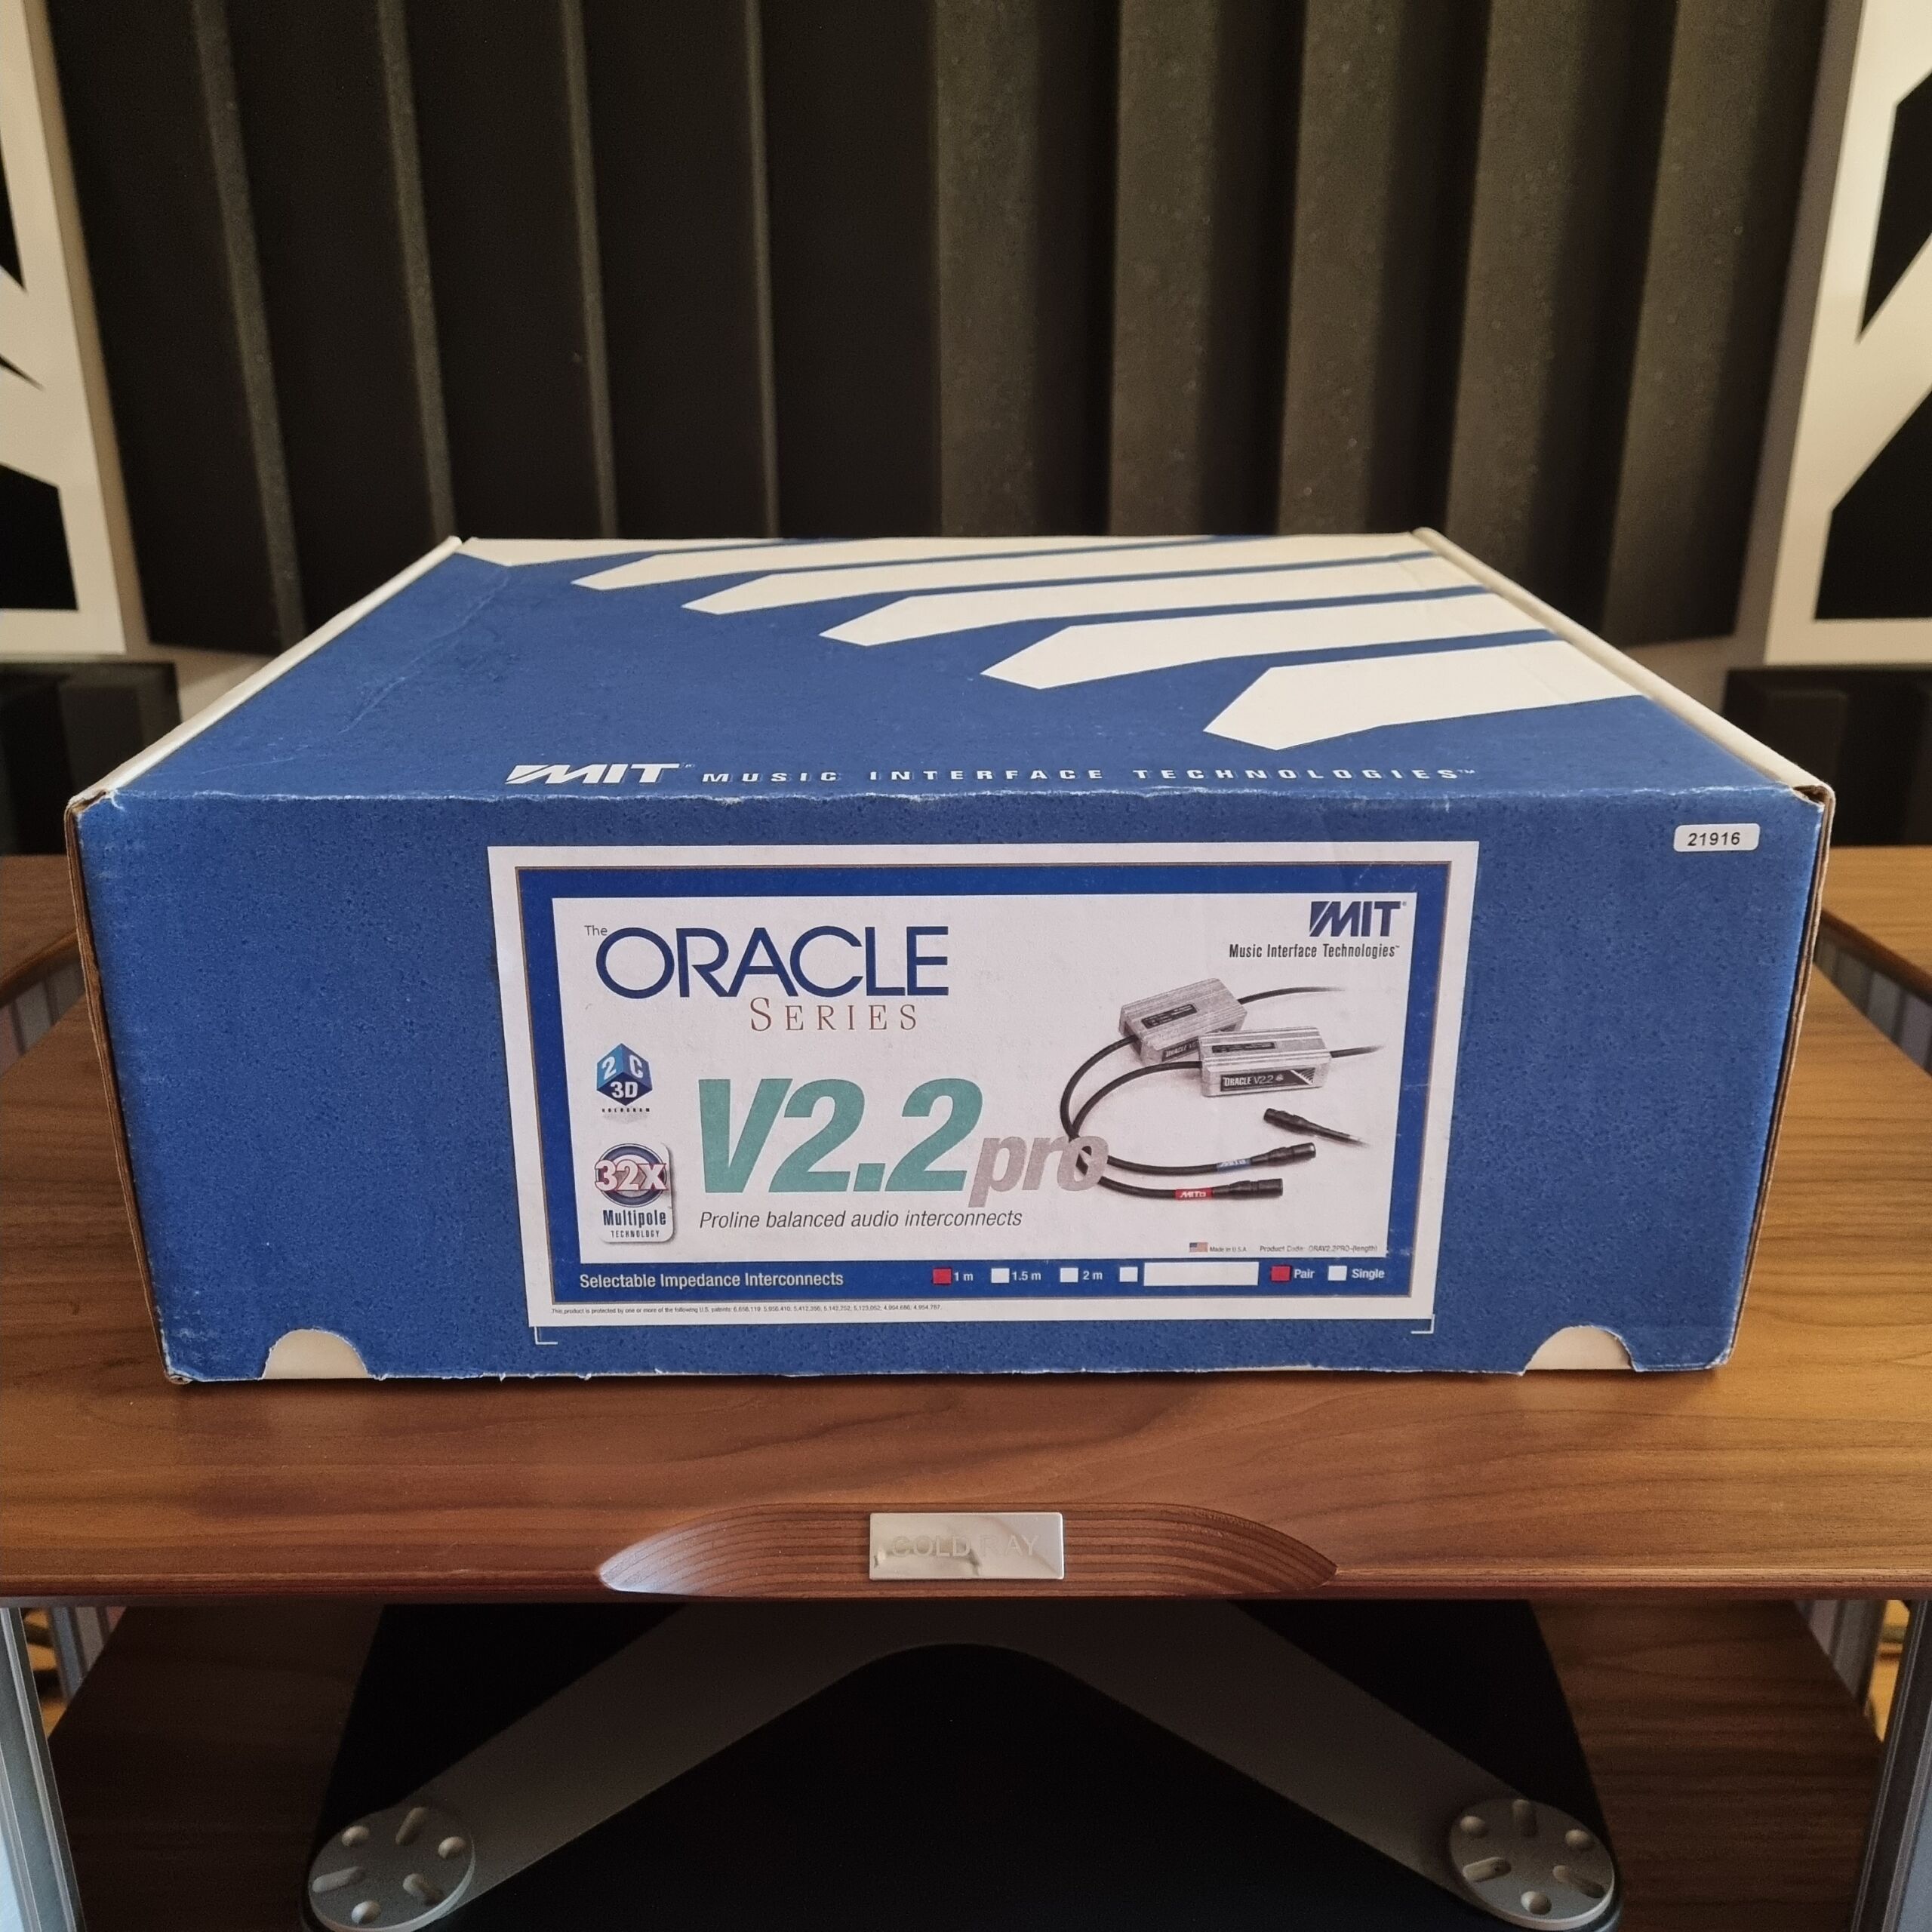 MIT Oracle V2.2pro